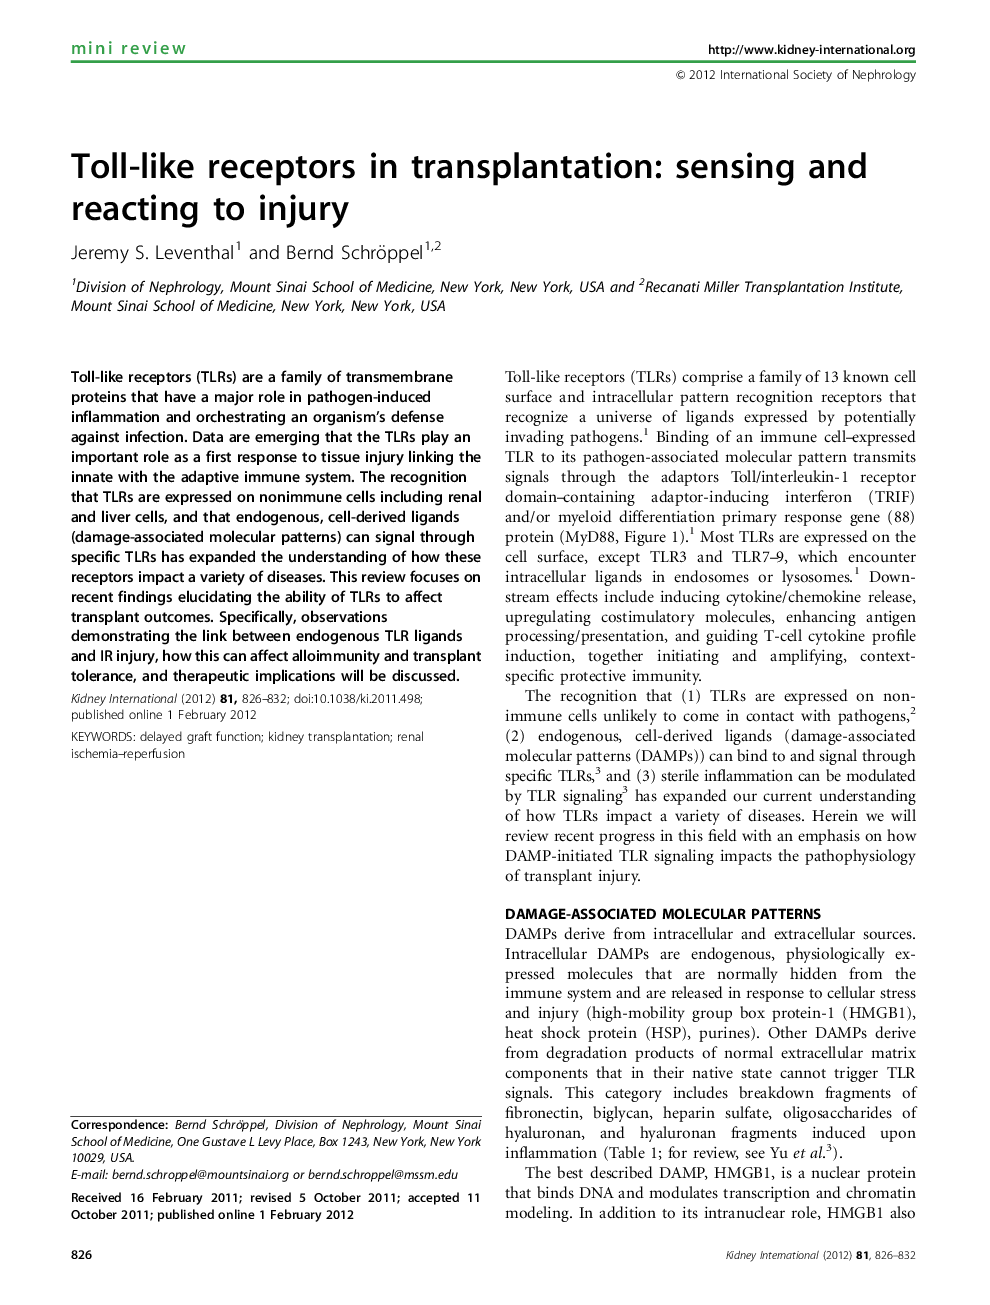 Toll-like receptors in transplantation: sensing and reacting to injury